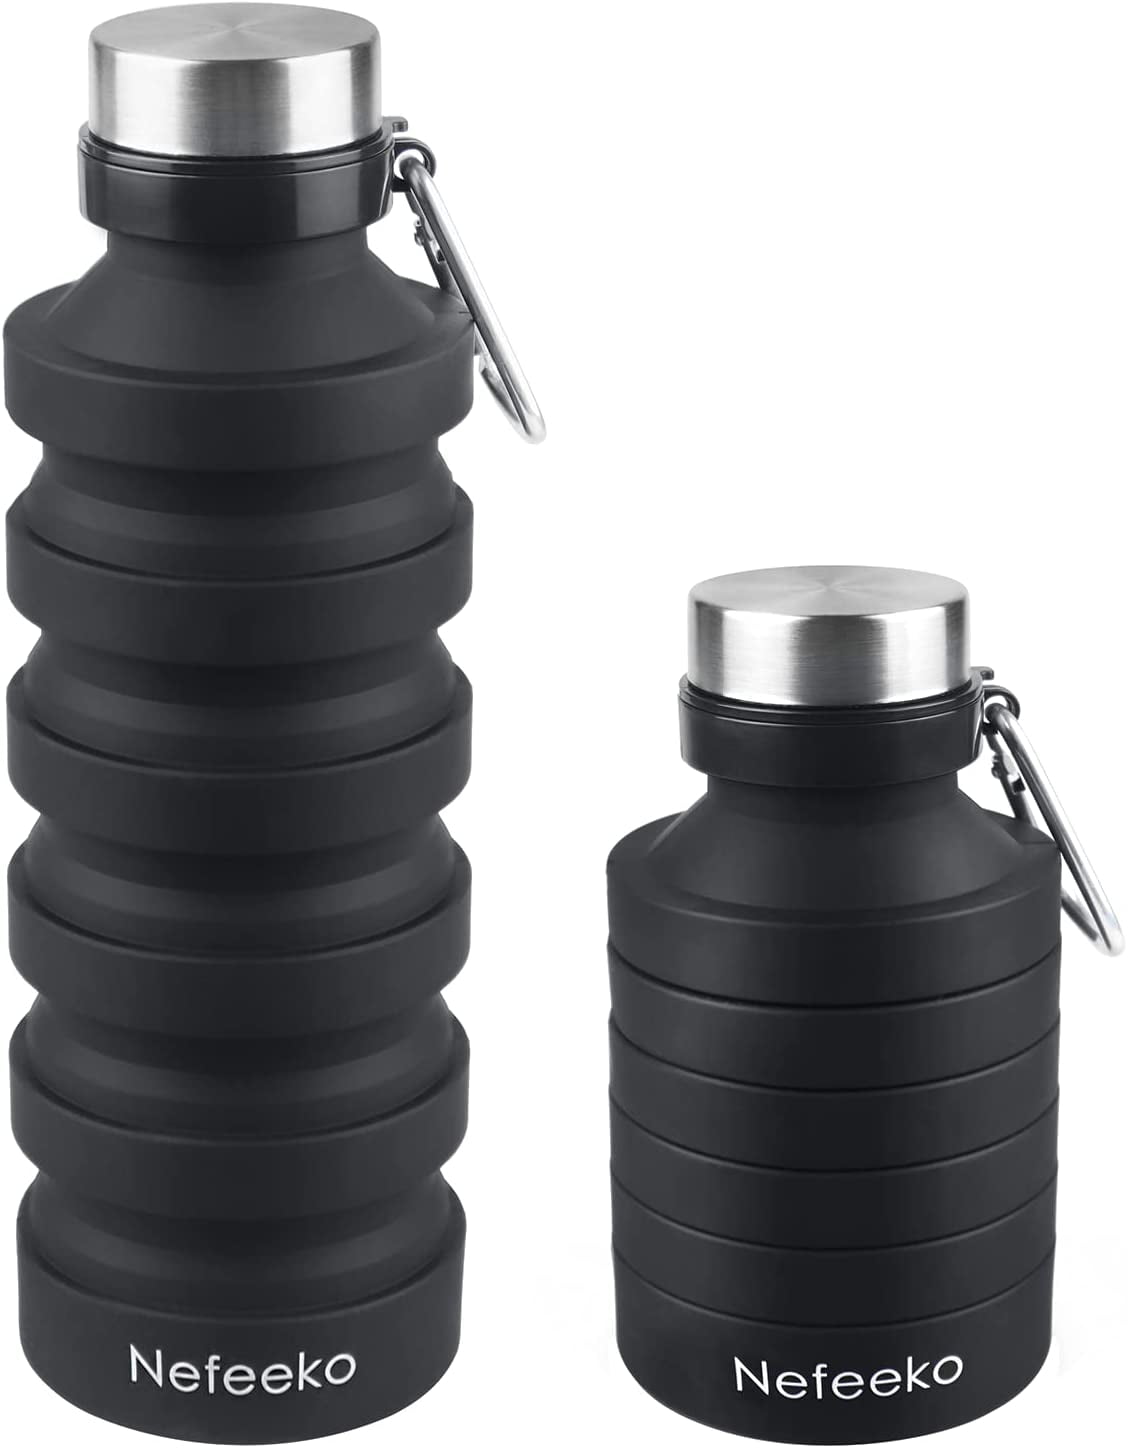 mountop Collapsible Water Bottle, Portable Food Grade Silicone Foldable  Travel Reusable Leak Proof W…See more mountop Collapsible Water Bottle